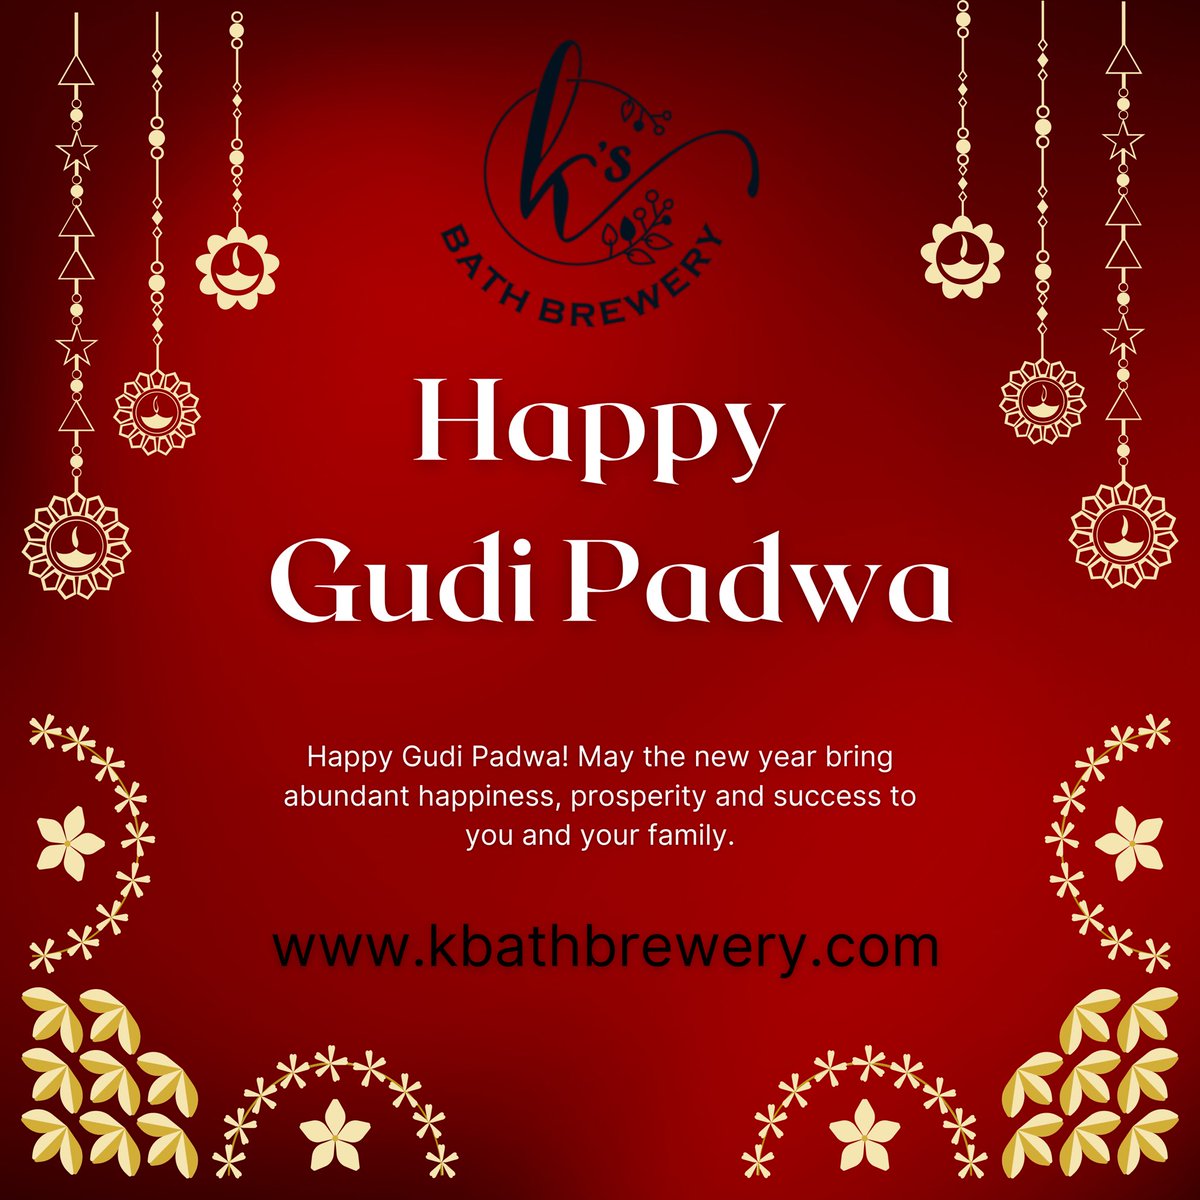 Happy #GudiPadwa! 🌼 Wishing you all joy and prosperity in the New Year ahead. #NewBeginnings 🎉